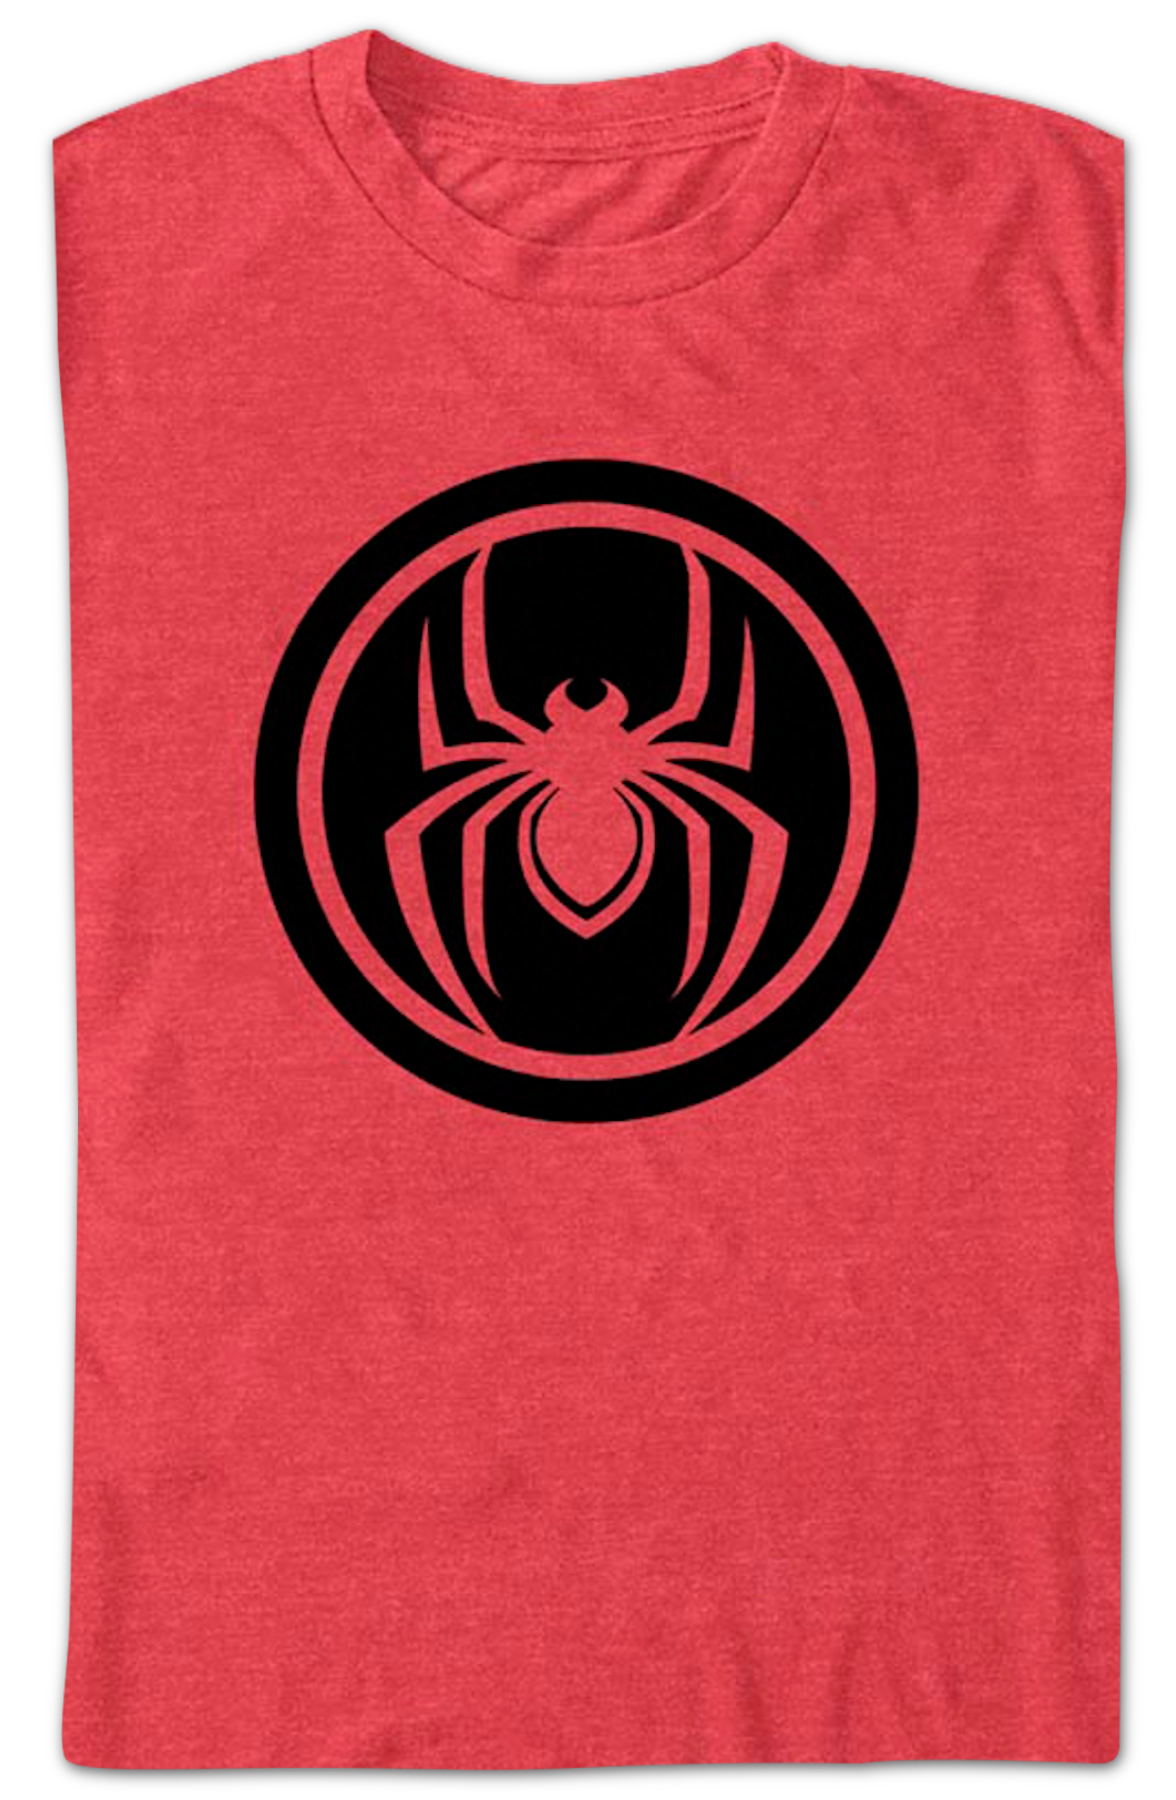 Spider-Man Circle Logo Marvel Comics T-Shirt